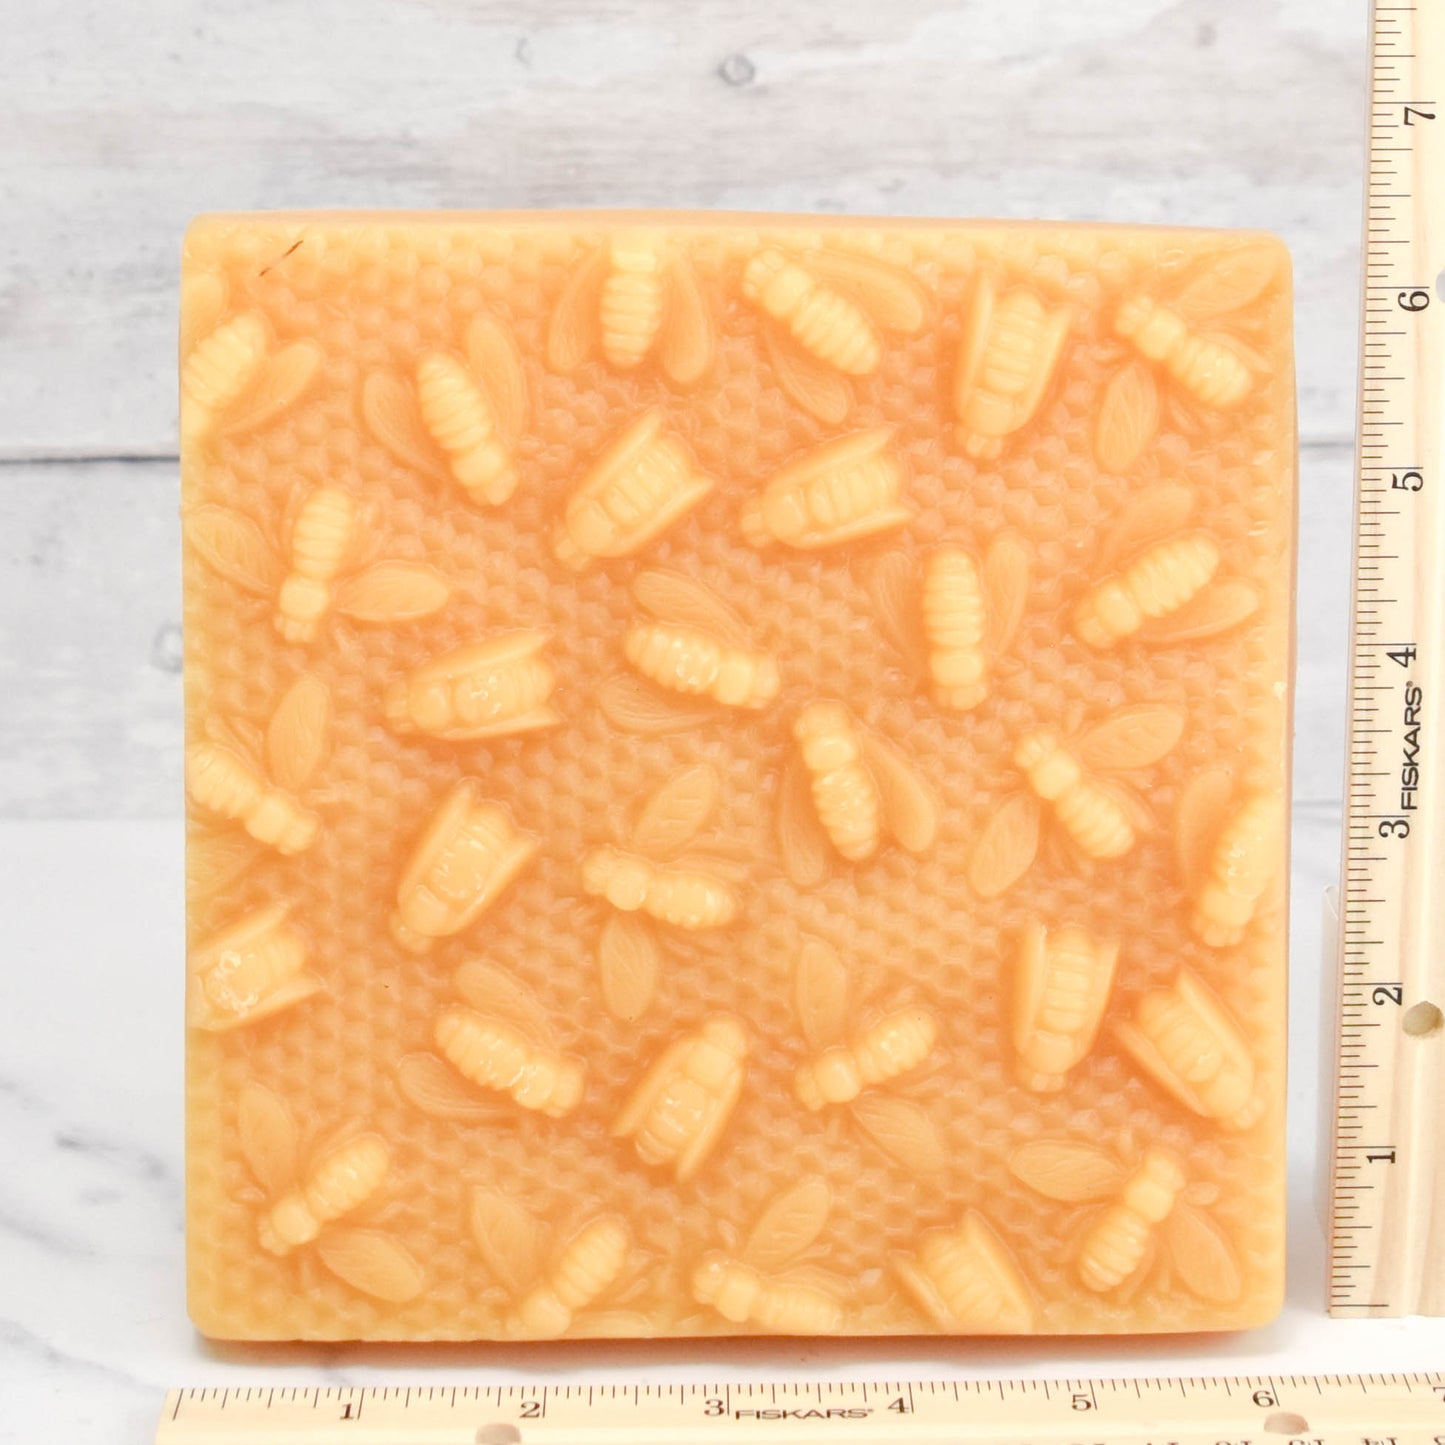 1 lb Bees on Honeycomb Beeswax Block